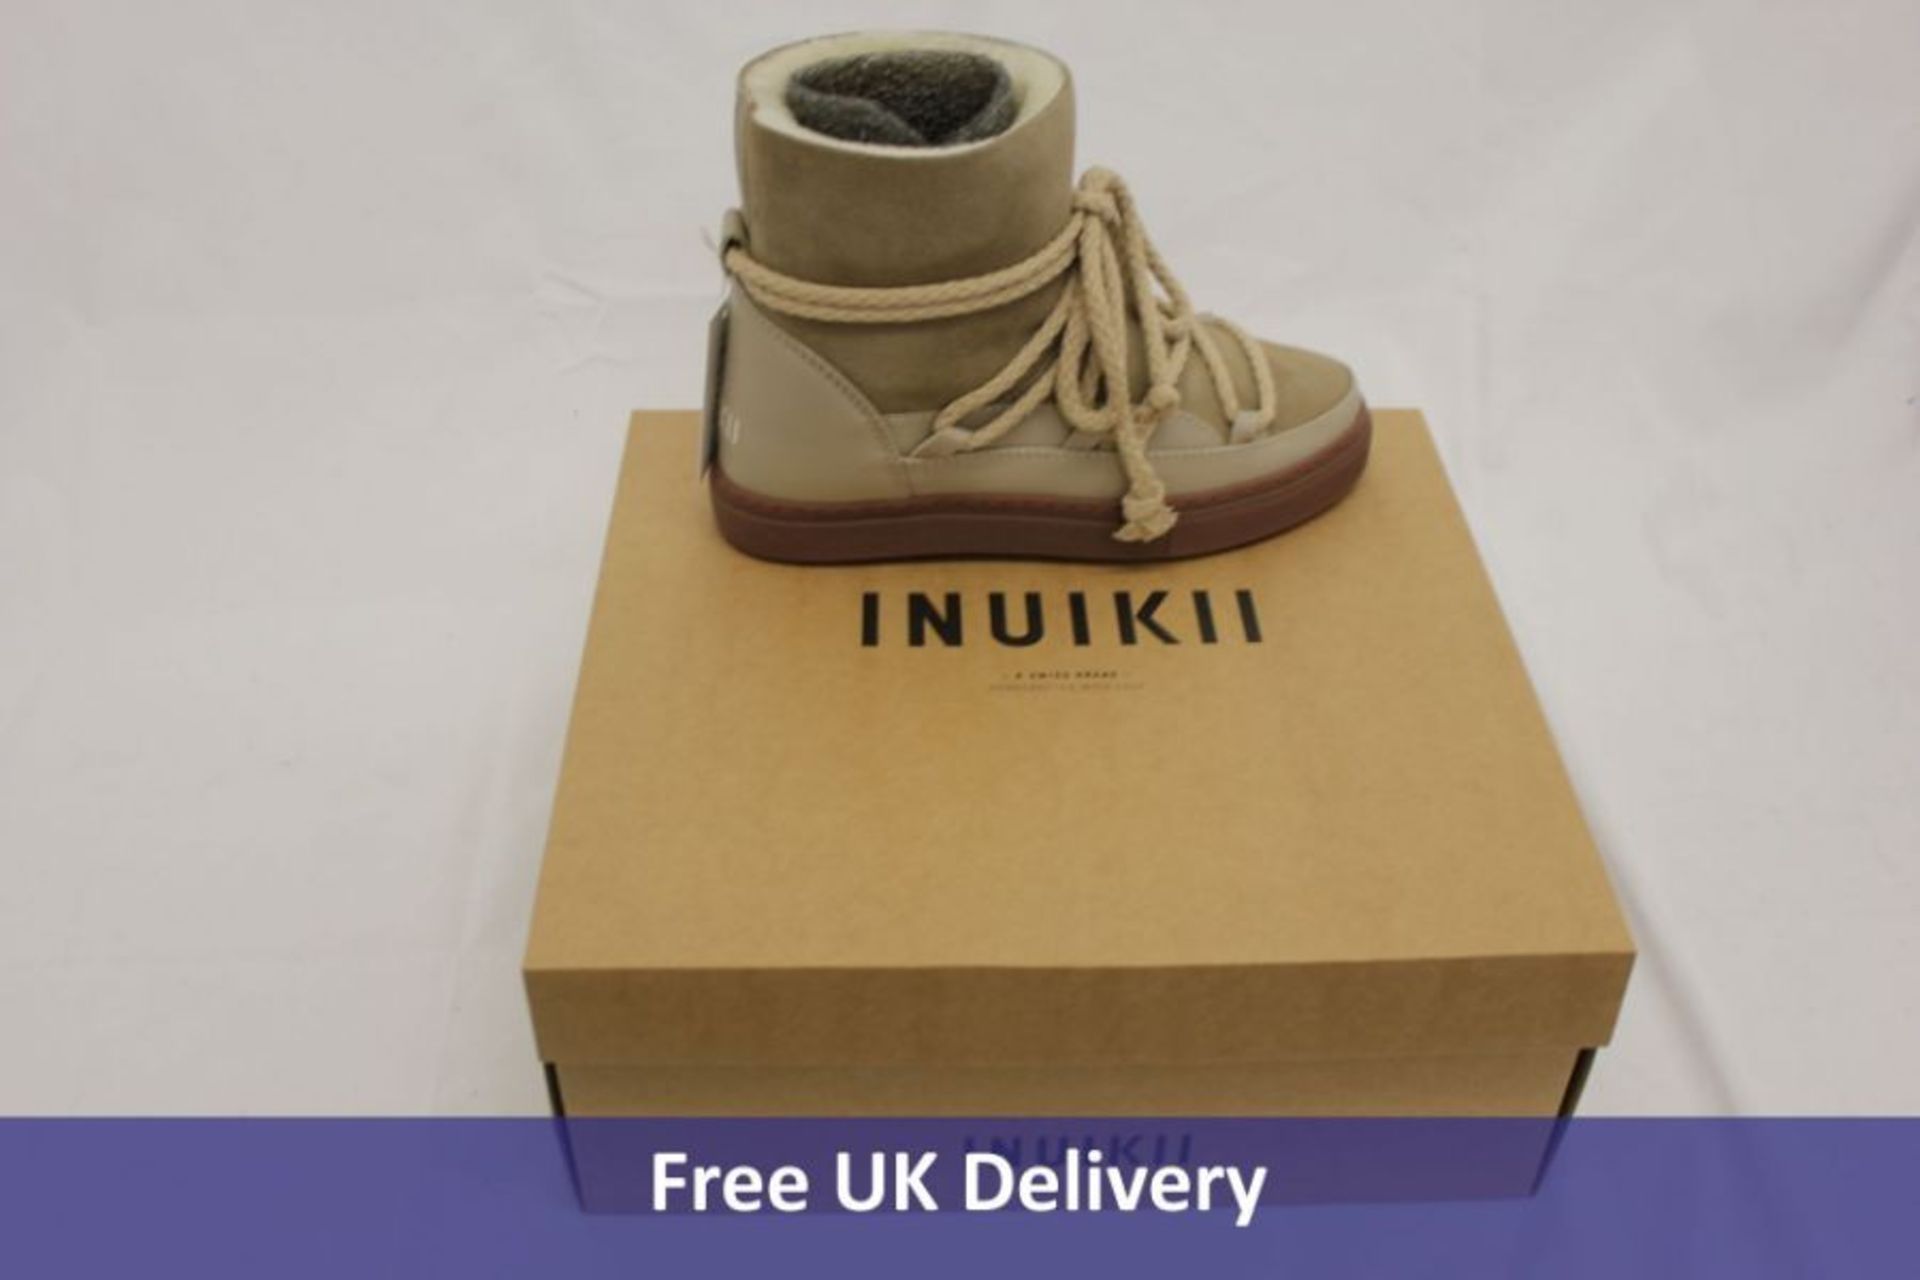 INUIKII Ankle Boots, Beige 70202-5, UK 4